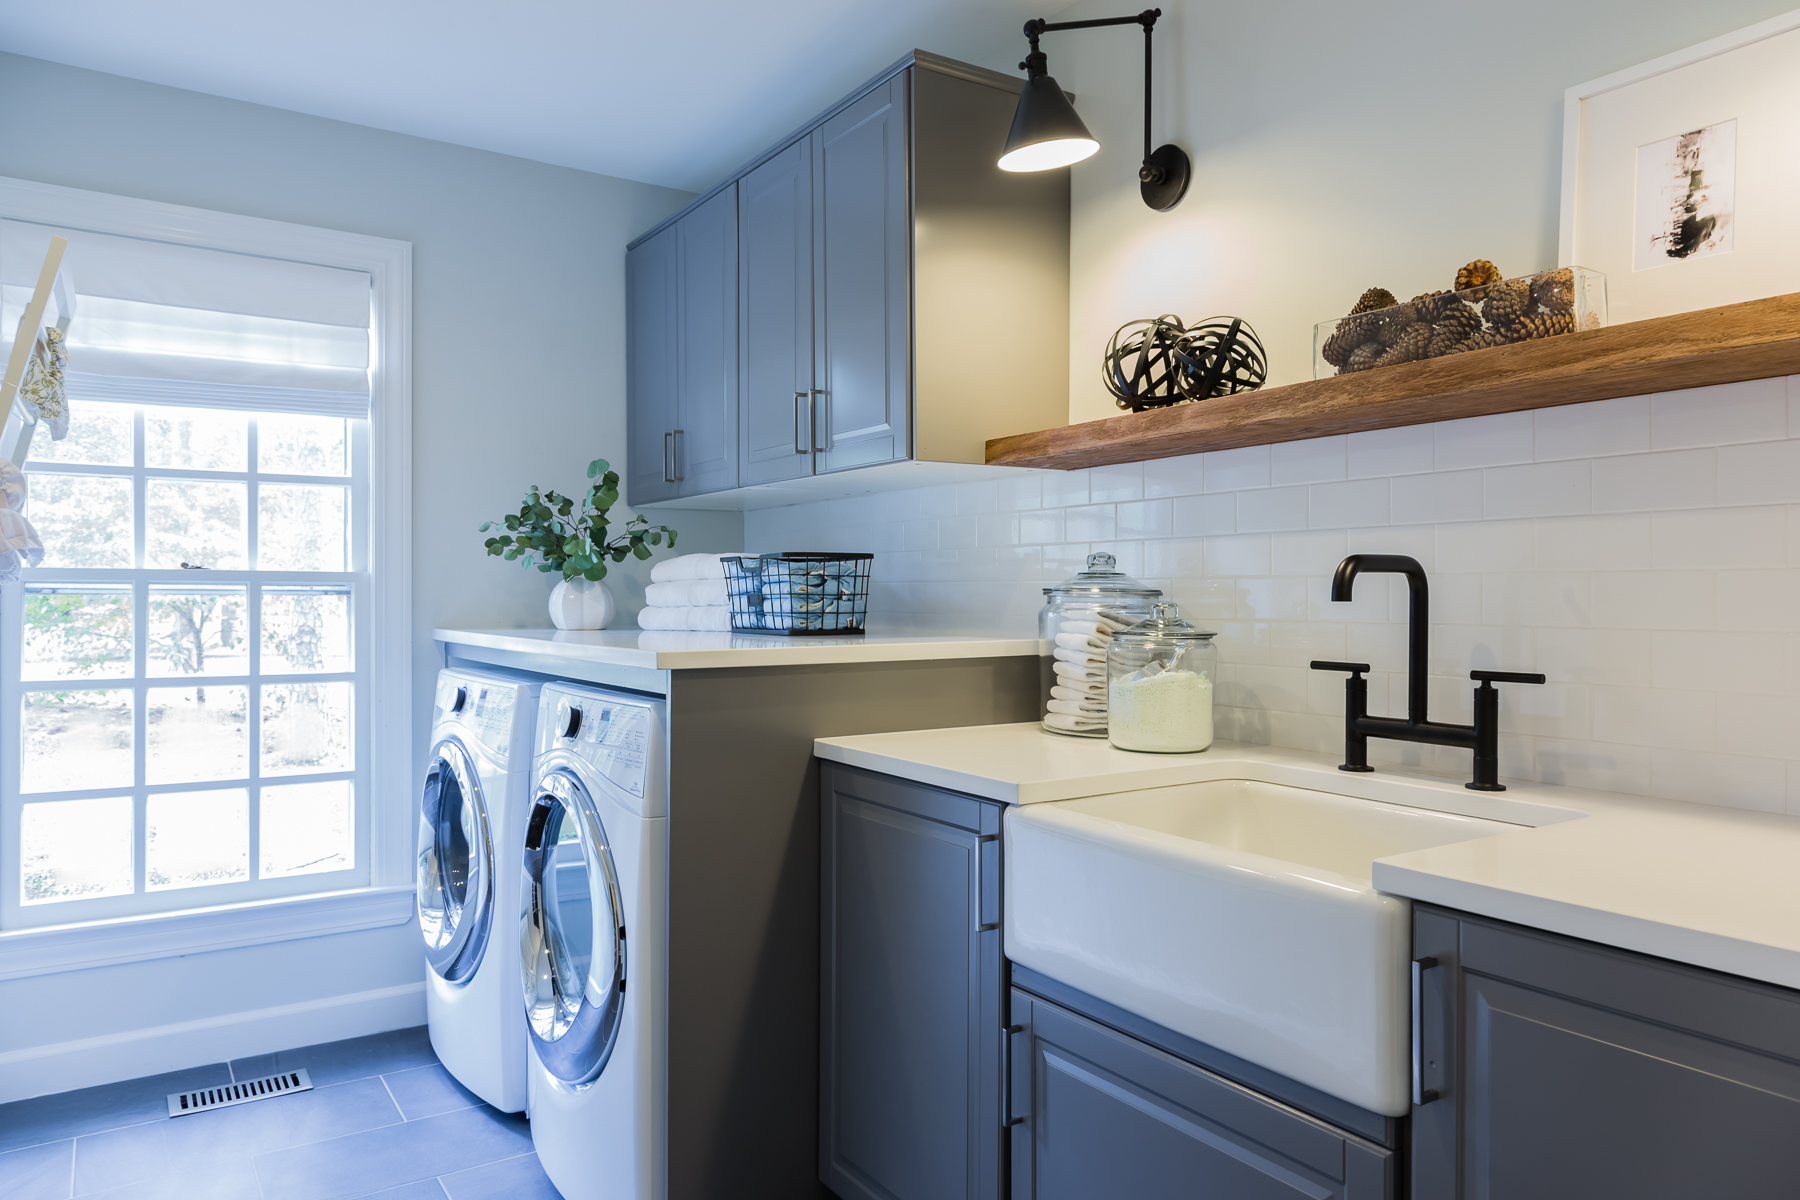 Sleek modern laundry room design with subway tile backsplash.